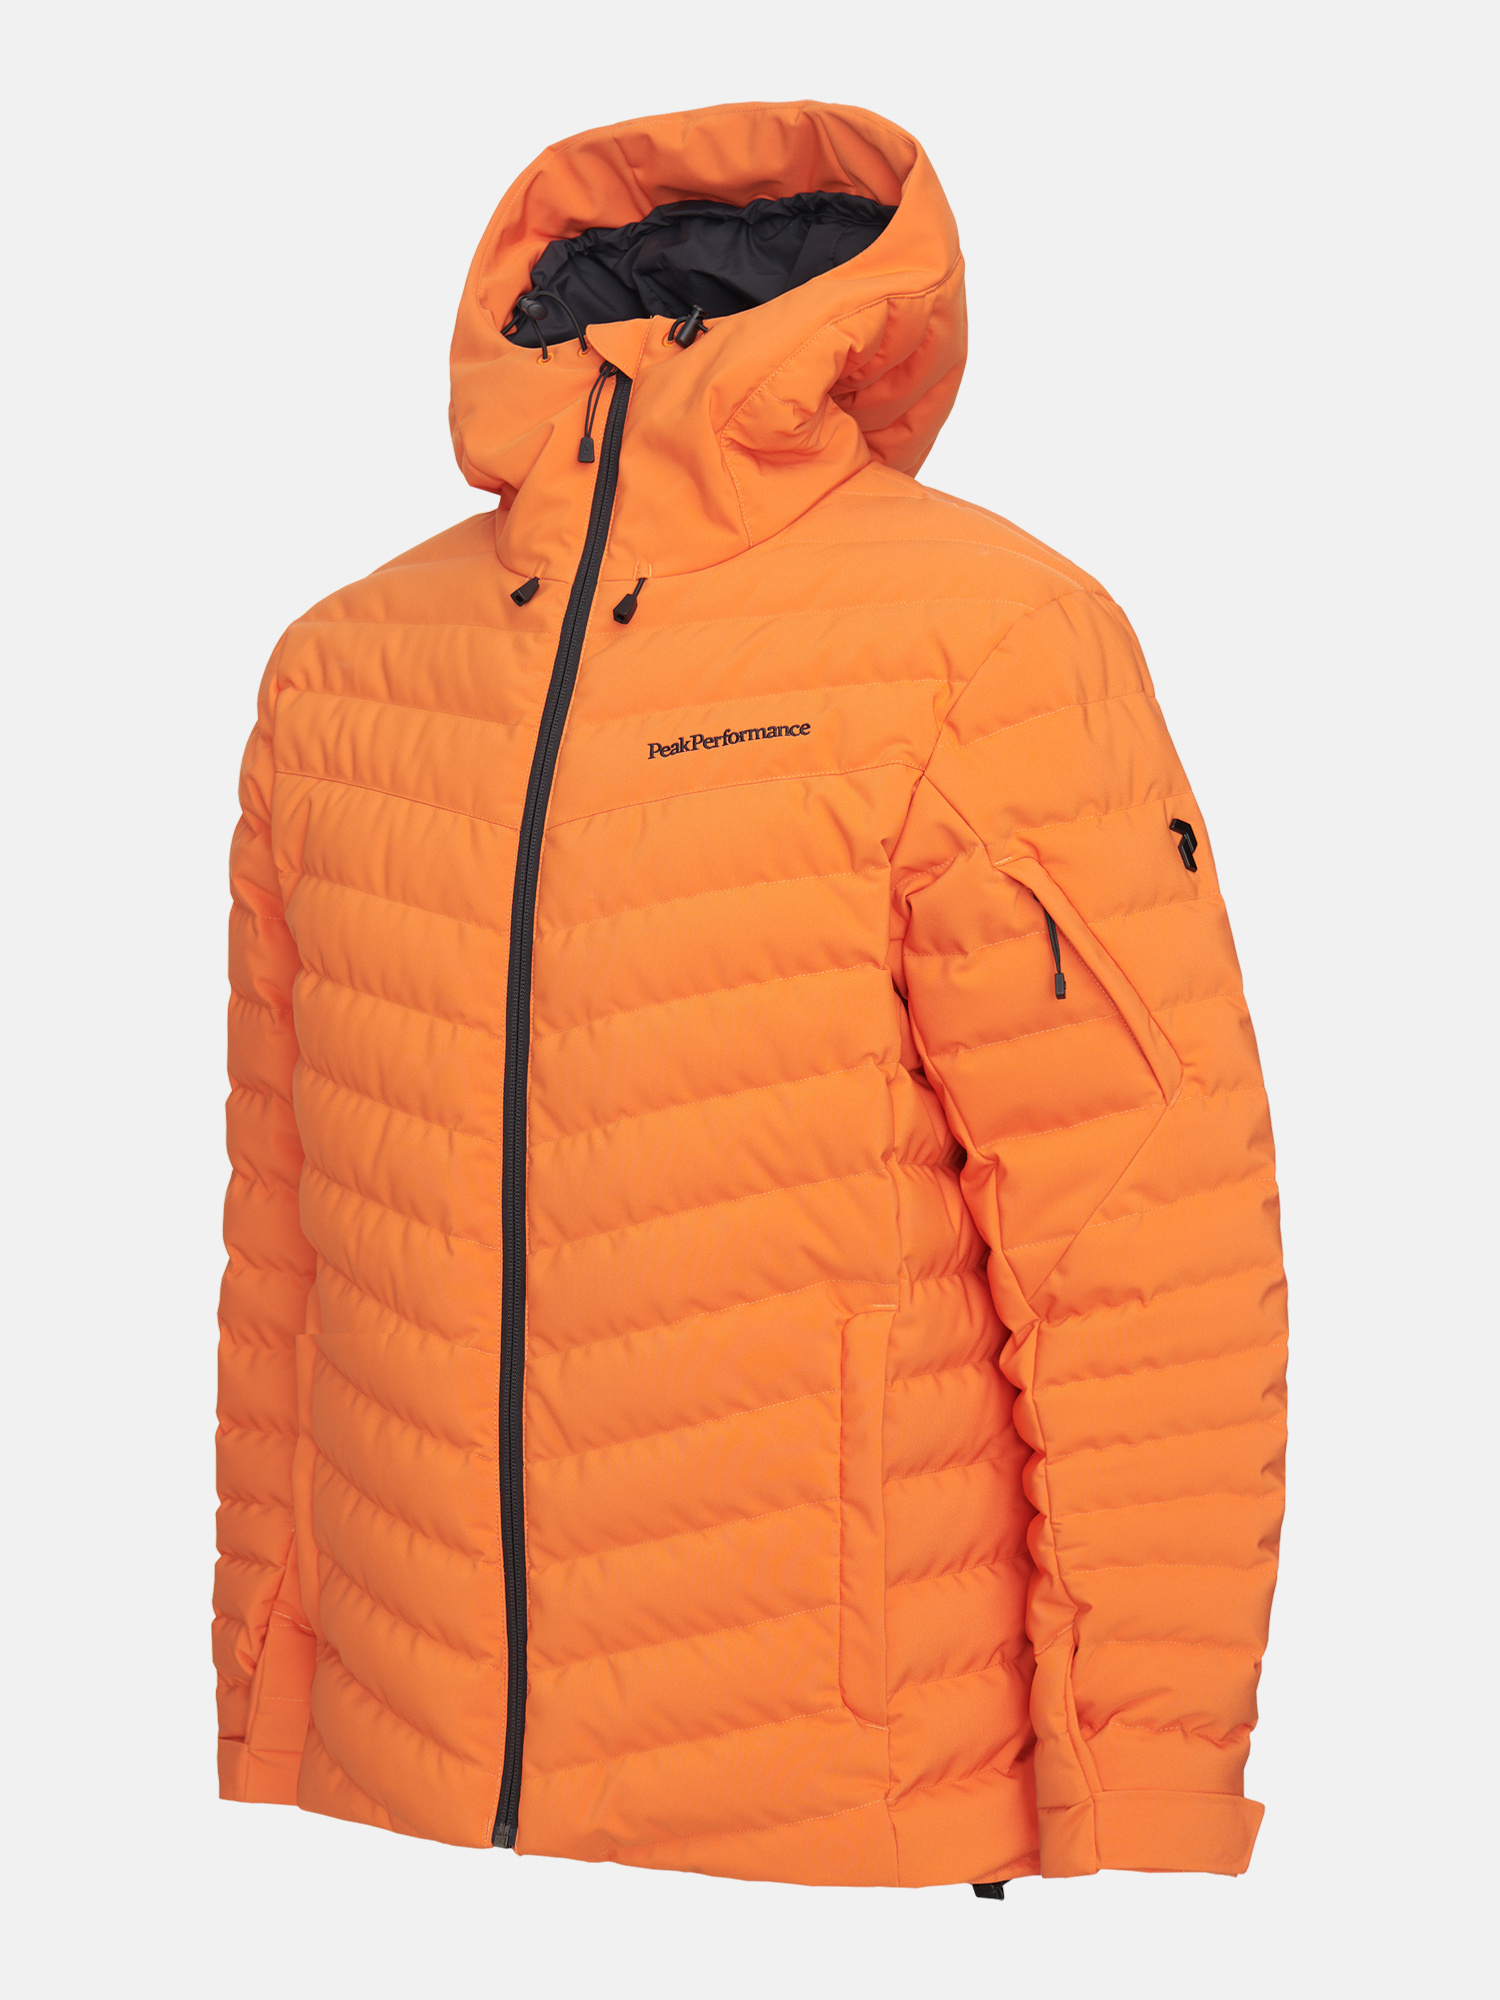 server parlement intelligentie Peak Performance Men's Frost Ski Jacket – Orange Altitude - Free Style Sport